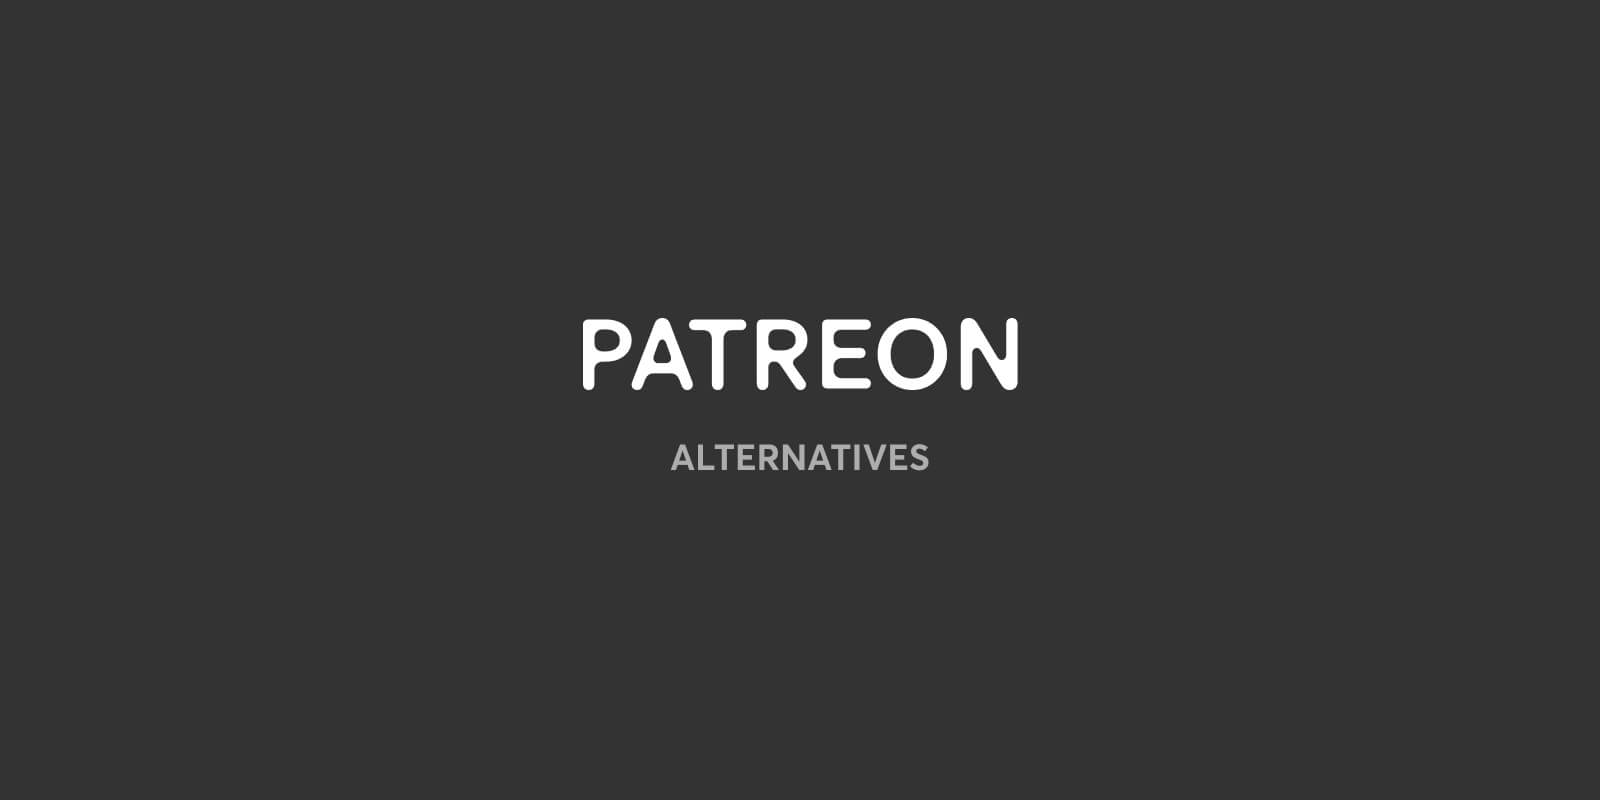 Patreon alternatives